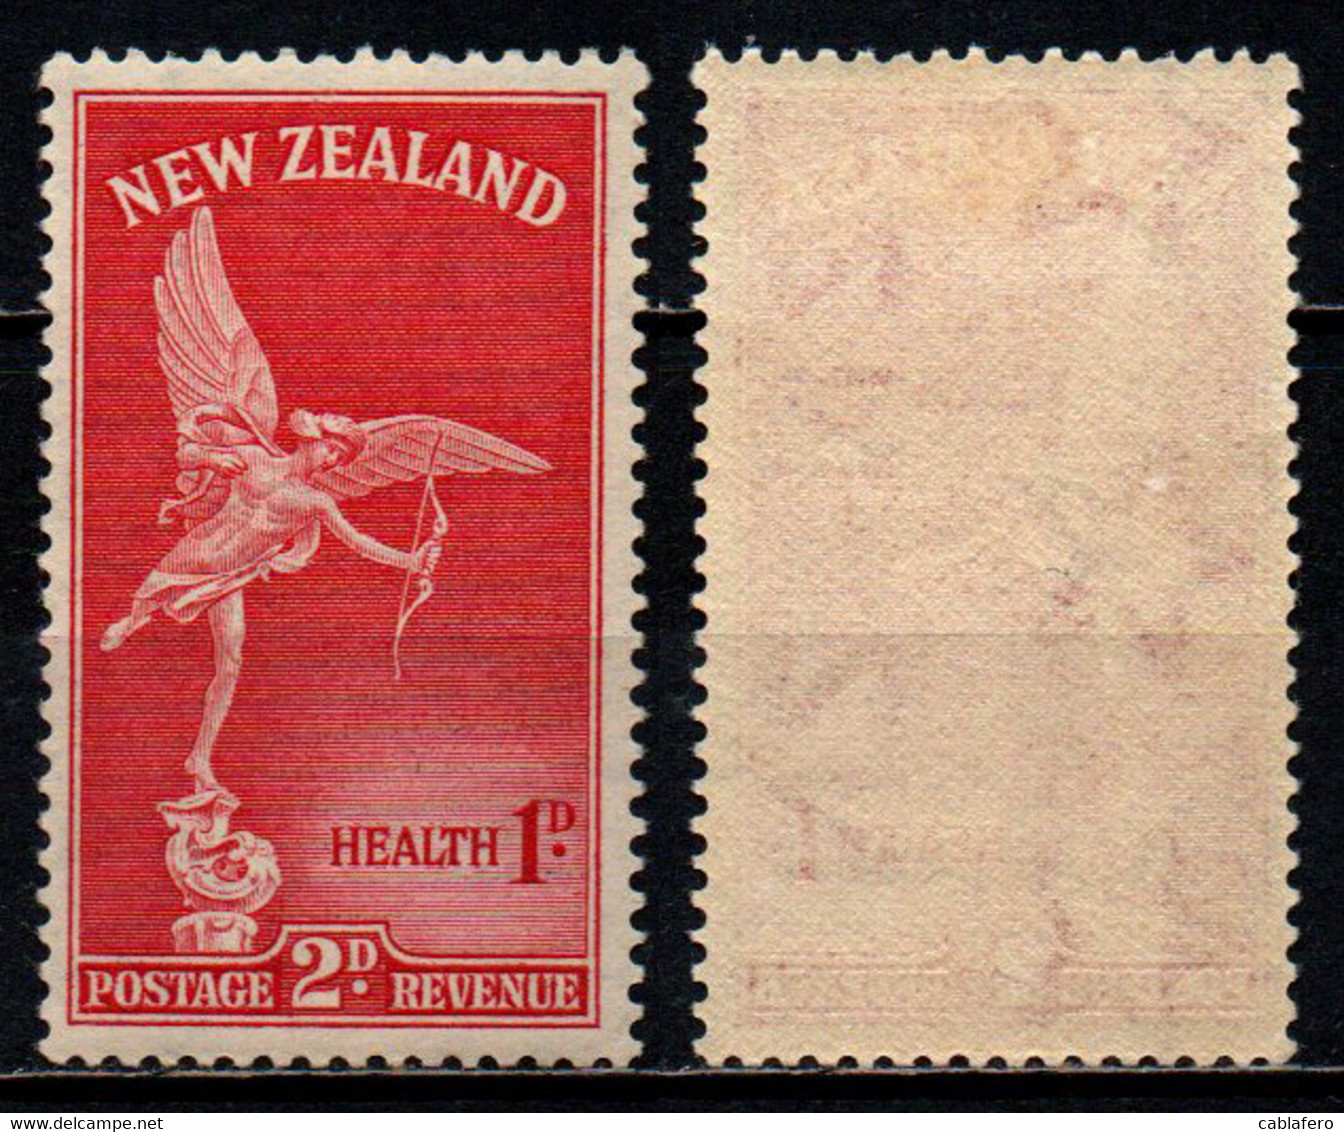 NUOVA ZELANDA - 1947 - Statue Of Eros,  London - MH - Unused Stamps